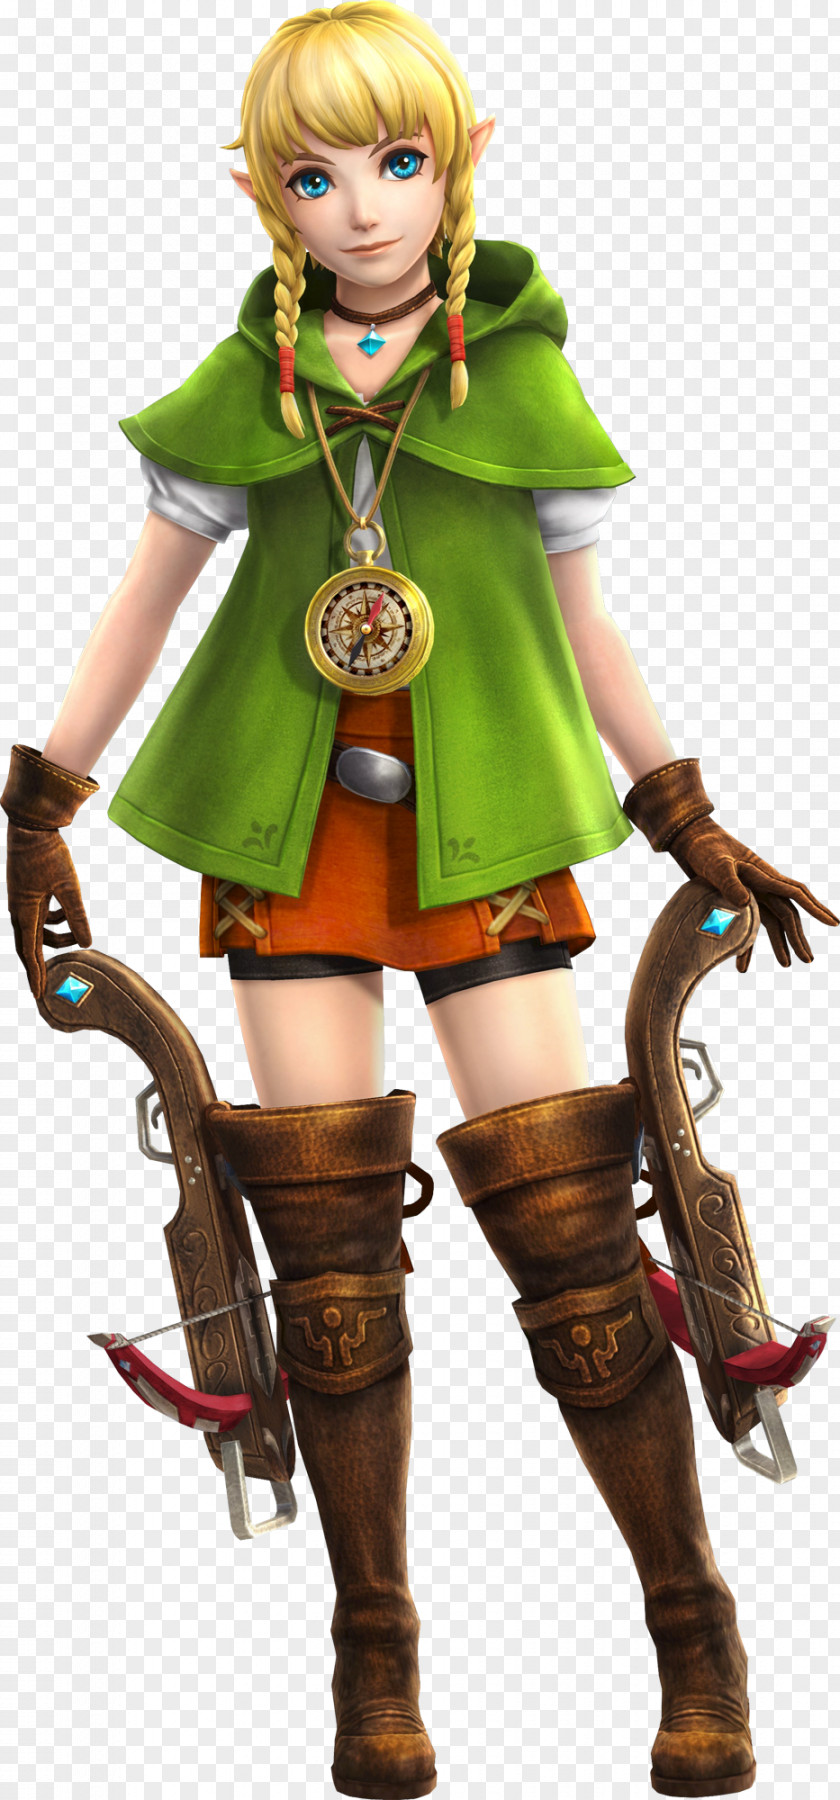 Link Hyrule Warriors The Legend Of Zelda: Wind Waker Breath Wild Majora's Mask Princess Zelda PNG